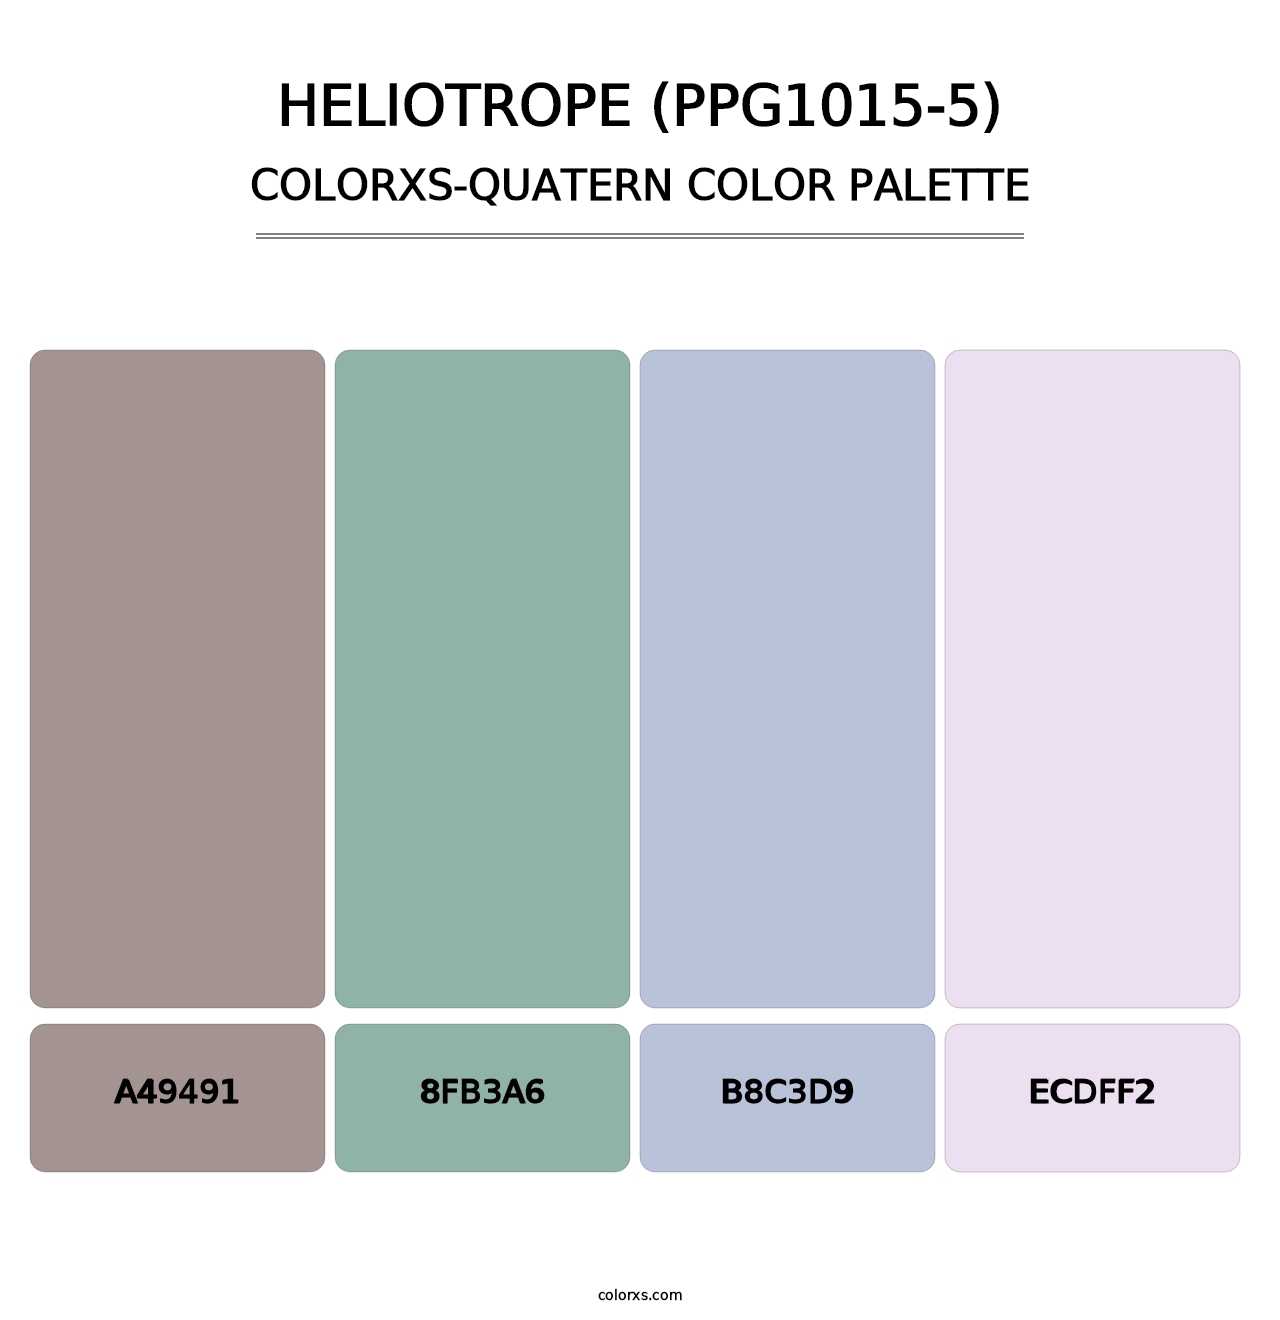 Heliotrope (PPG1015-5) - Colorxs Quatern Palette